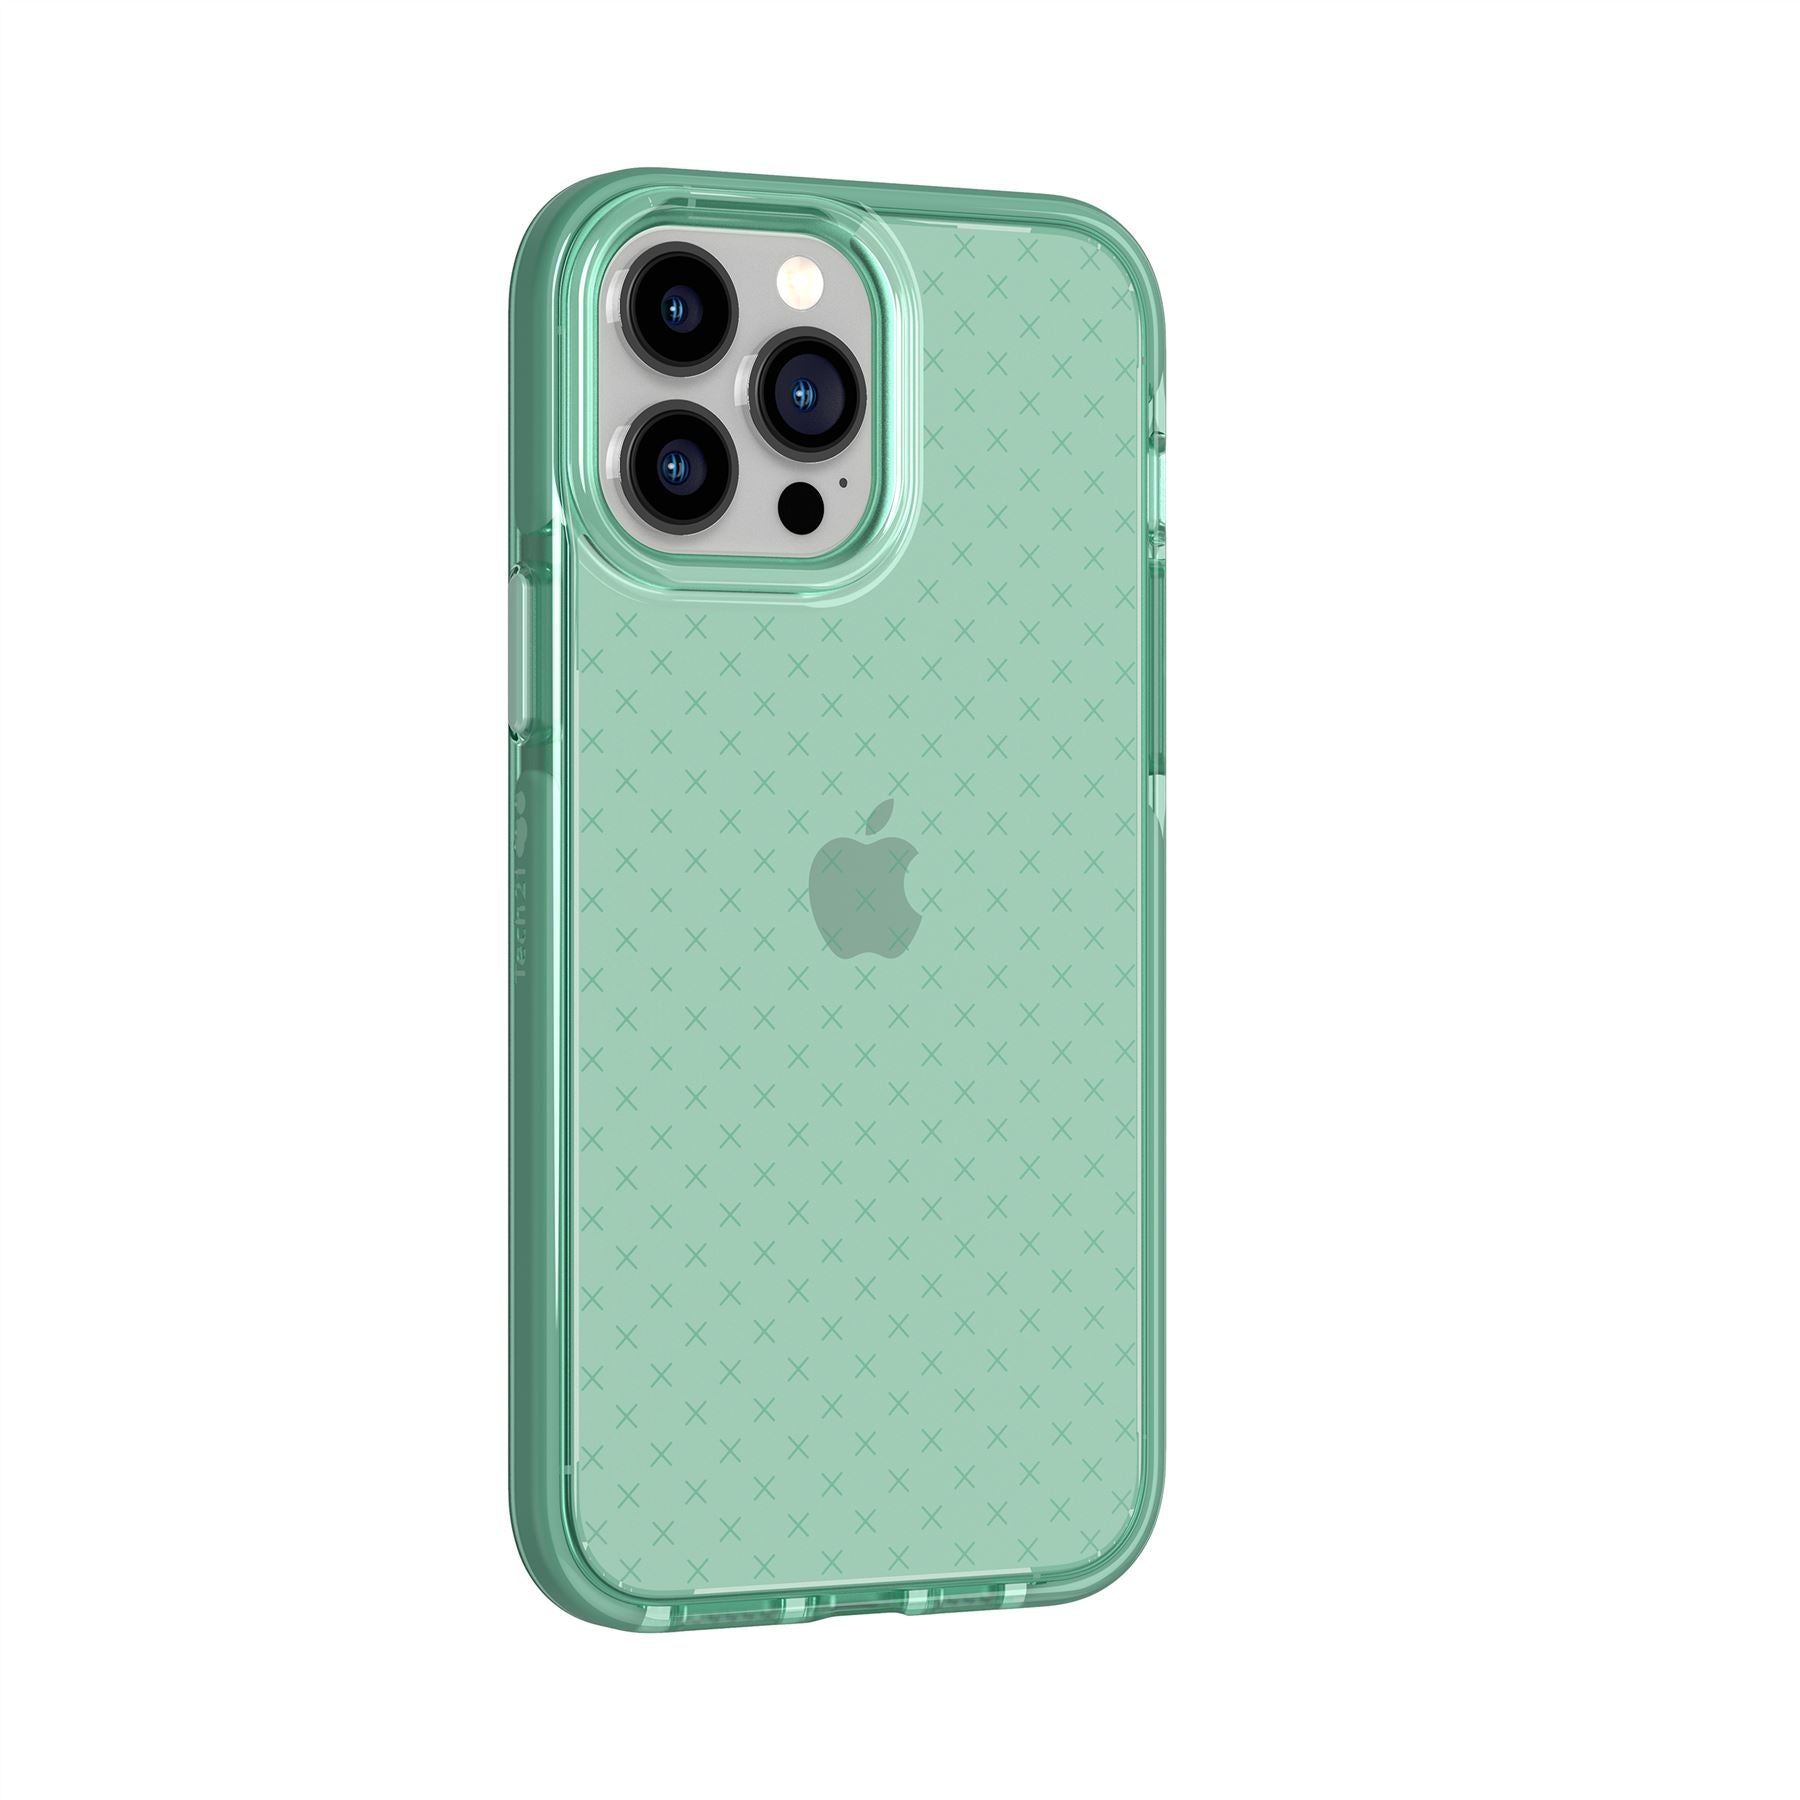 Evo Check - Apple iPhone 13 Pro Max Case - Sage Green